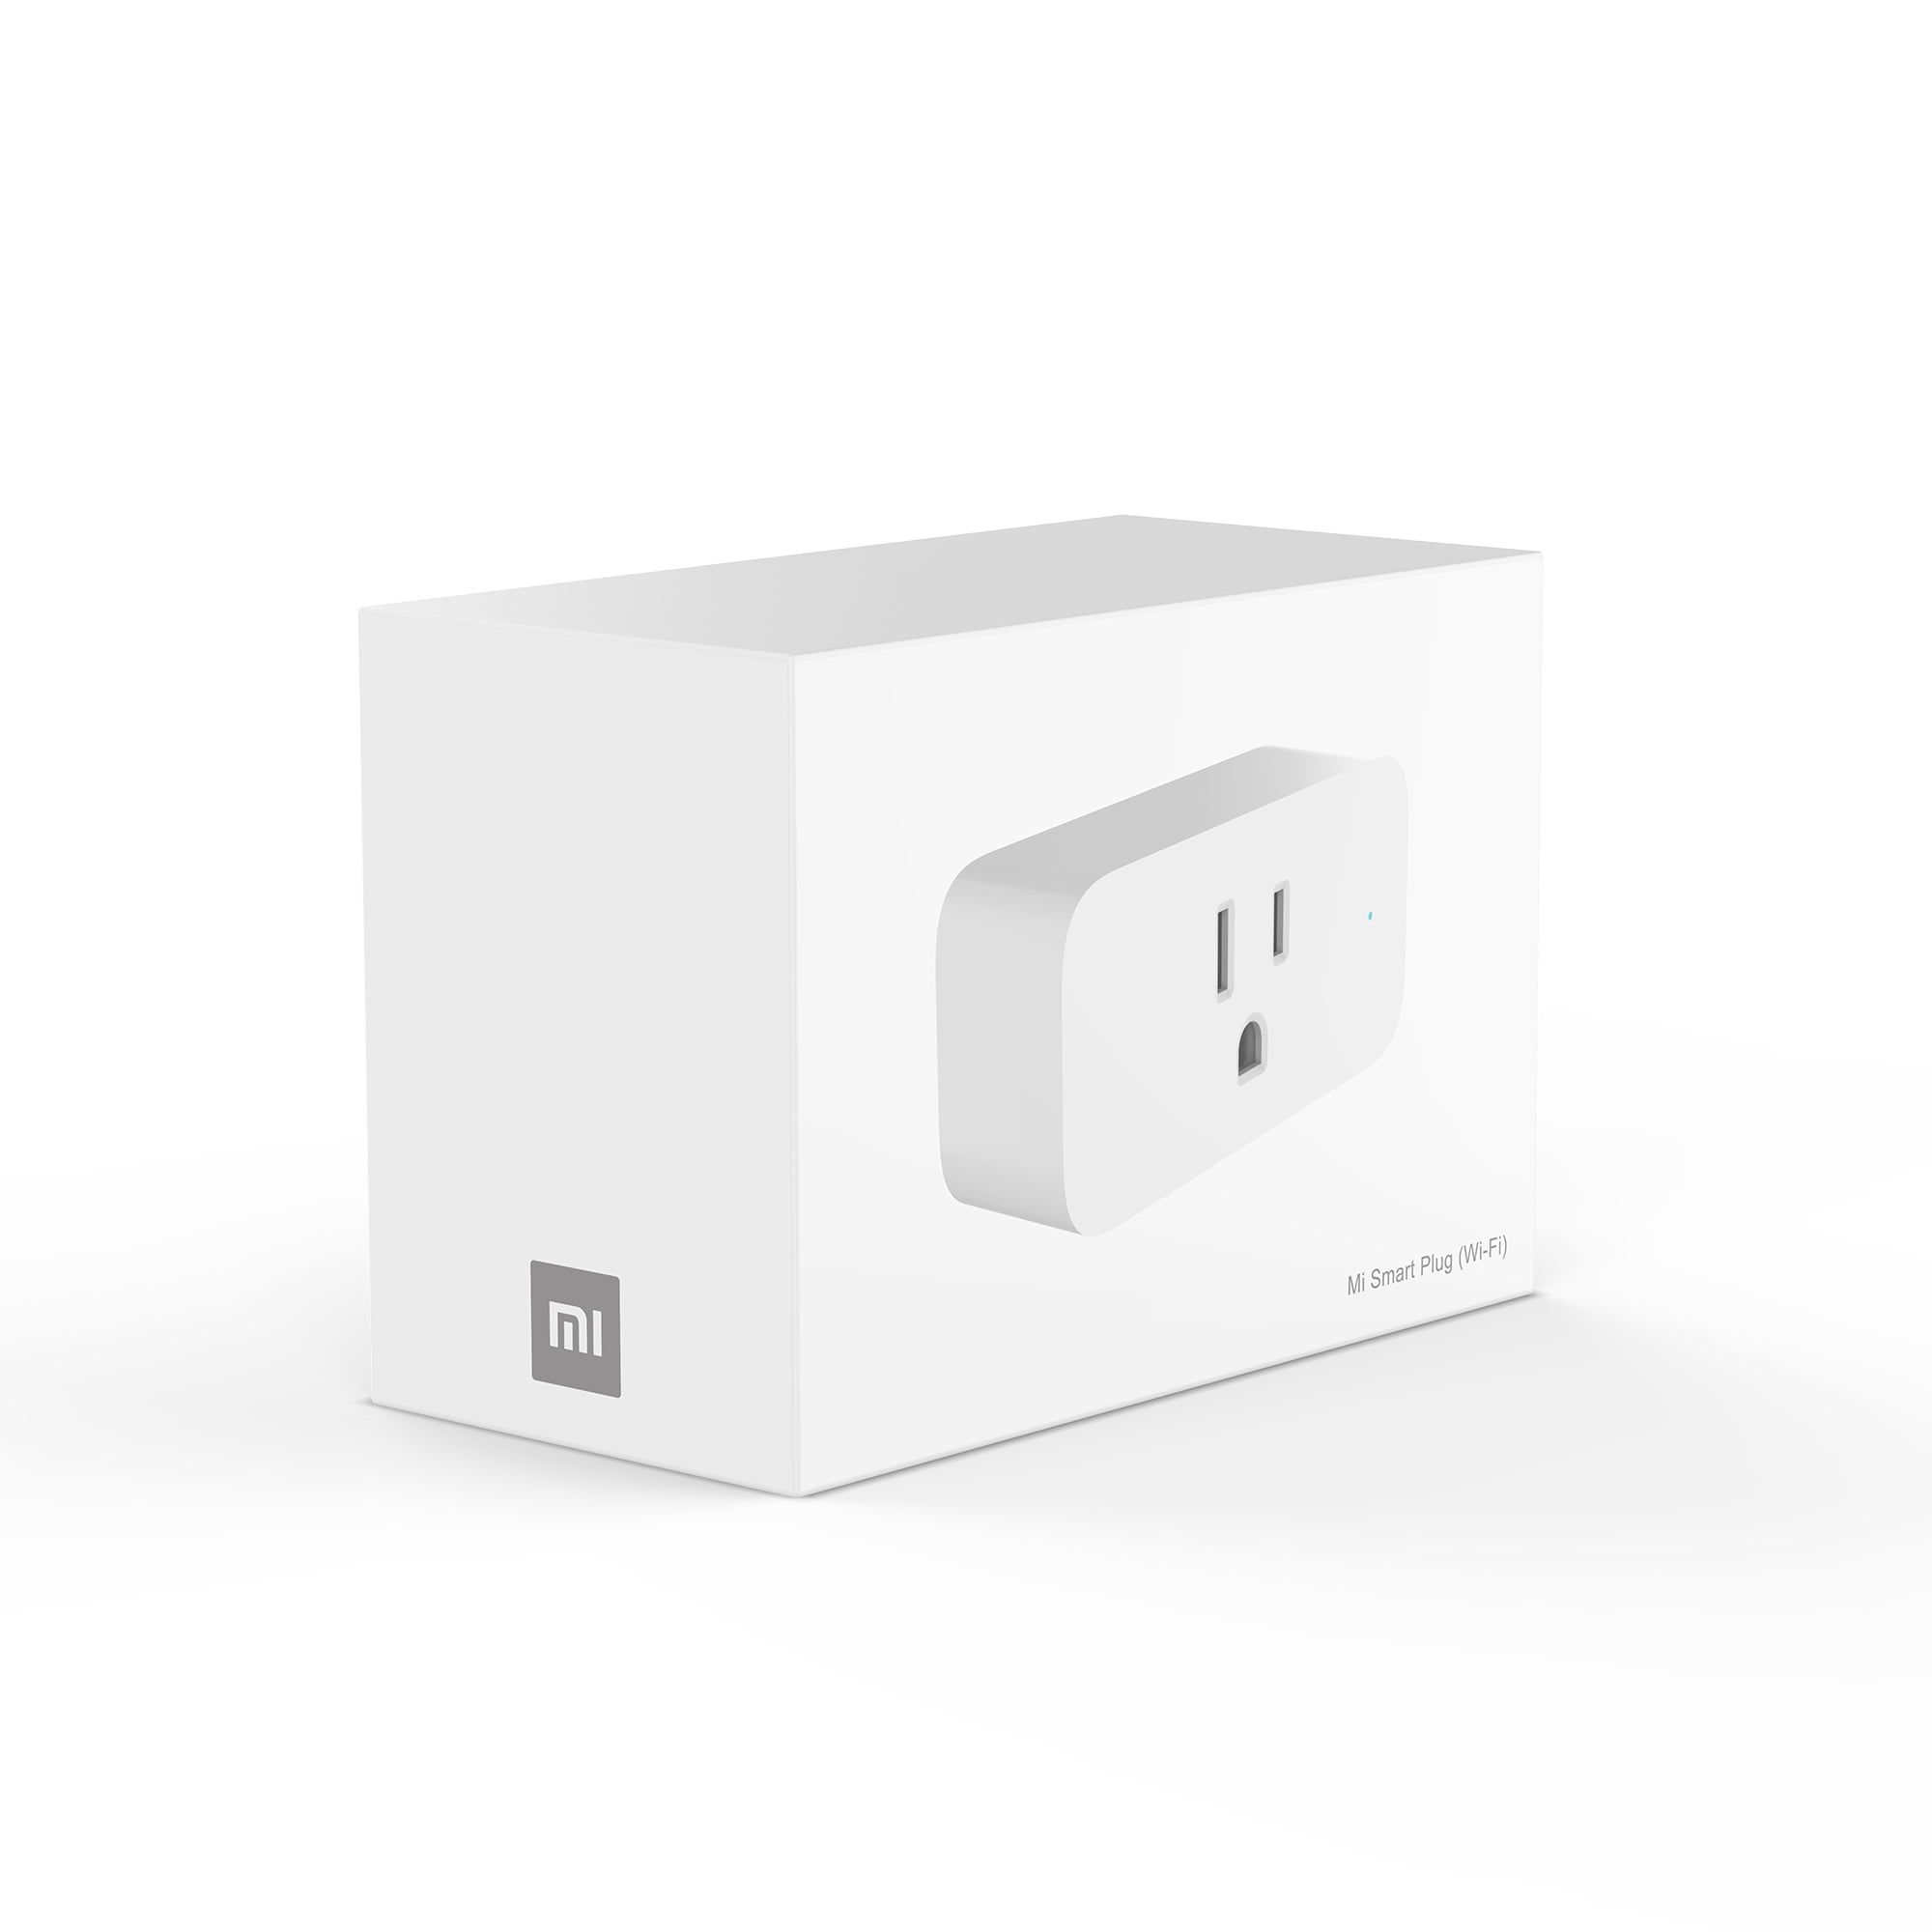 Xiaomi Mi Smart Plug Basic Wifi Global Version - Electrical Socket